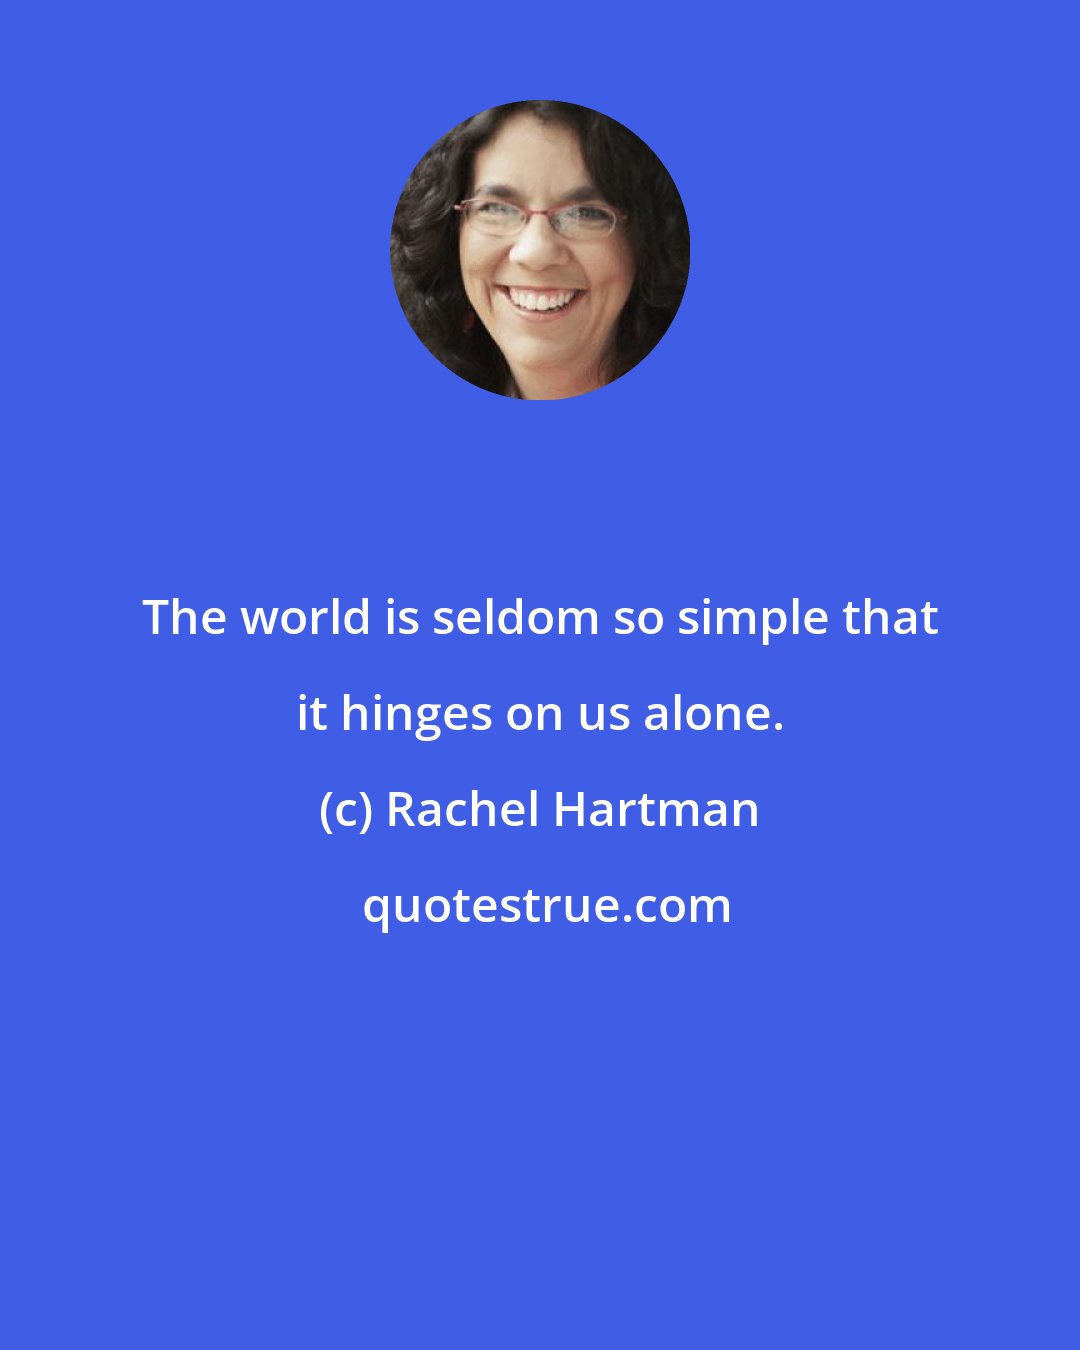 Rachel Hartman: The world is seldom so simple that it hinges on us alone.